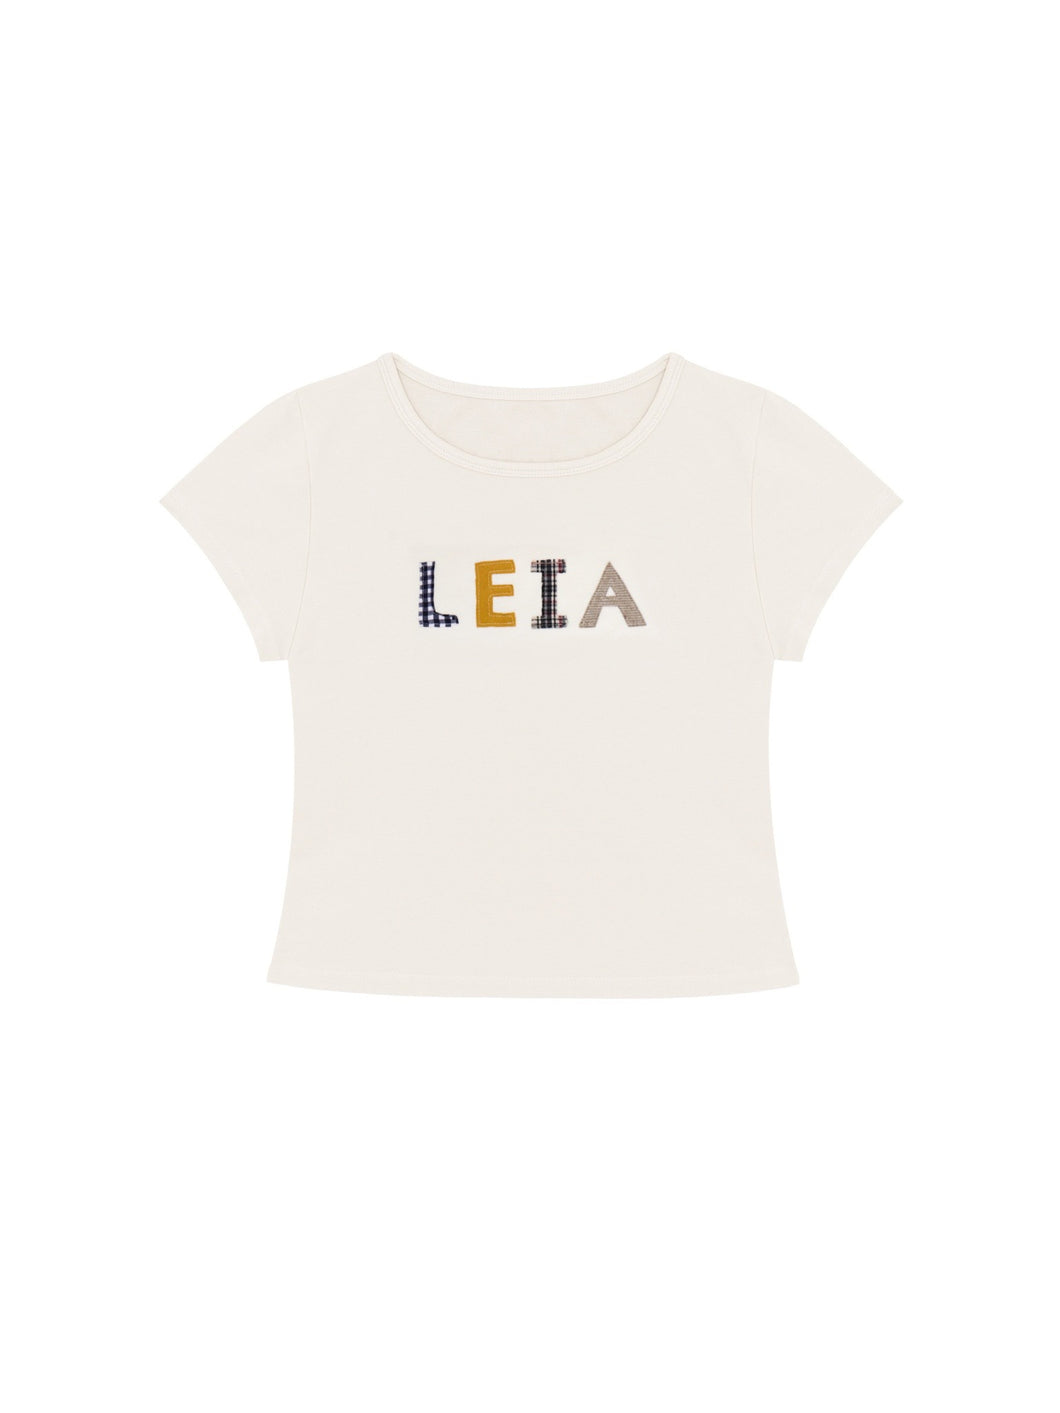 LEIA Baby Tee